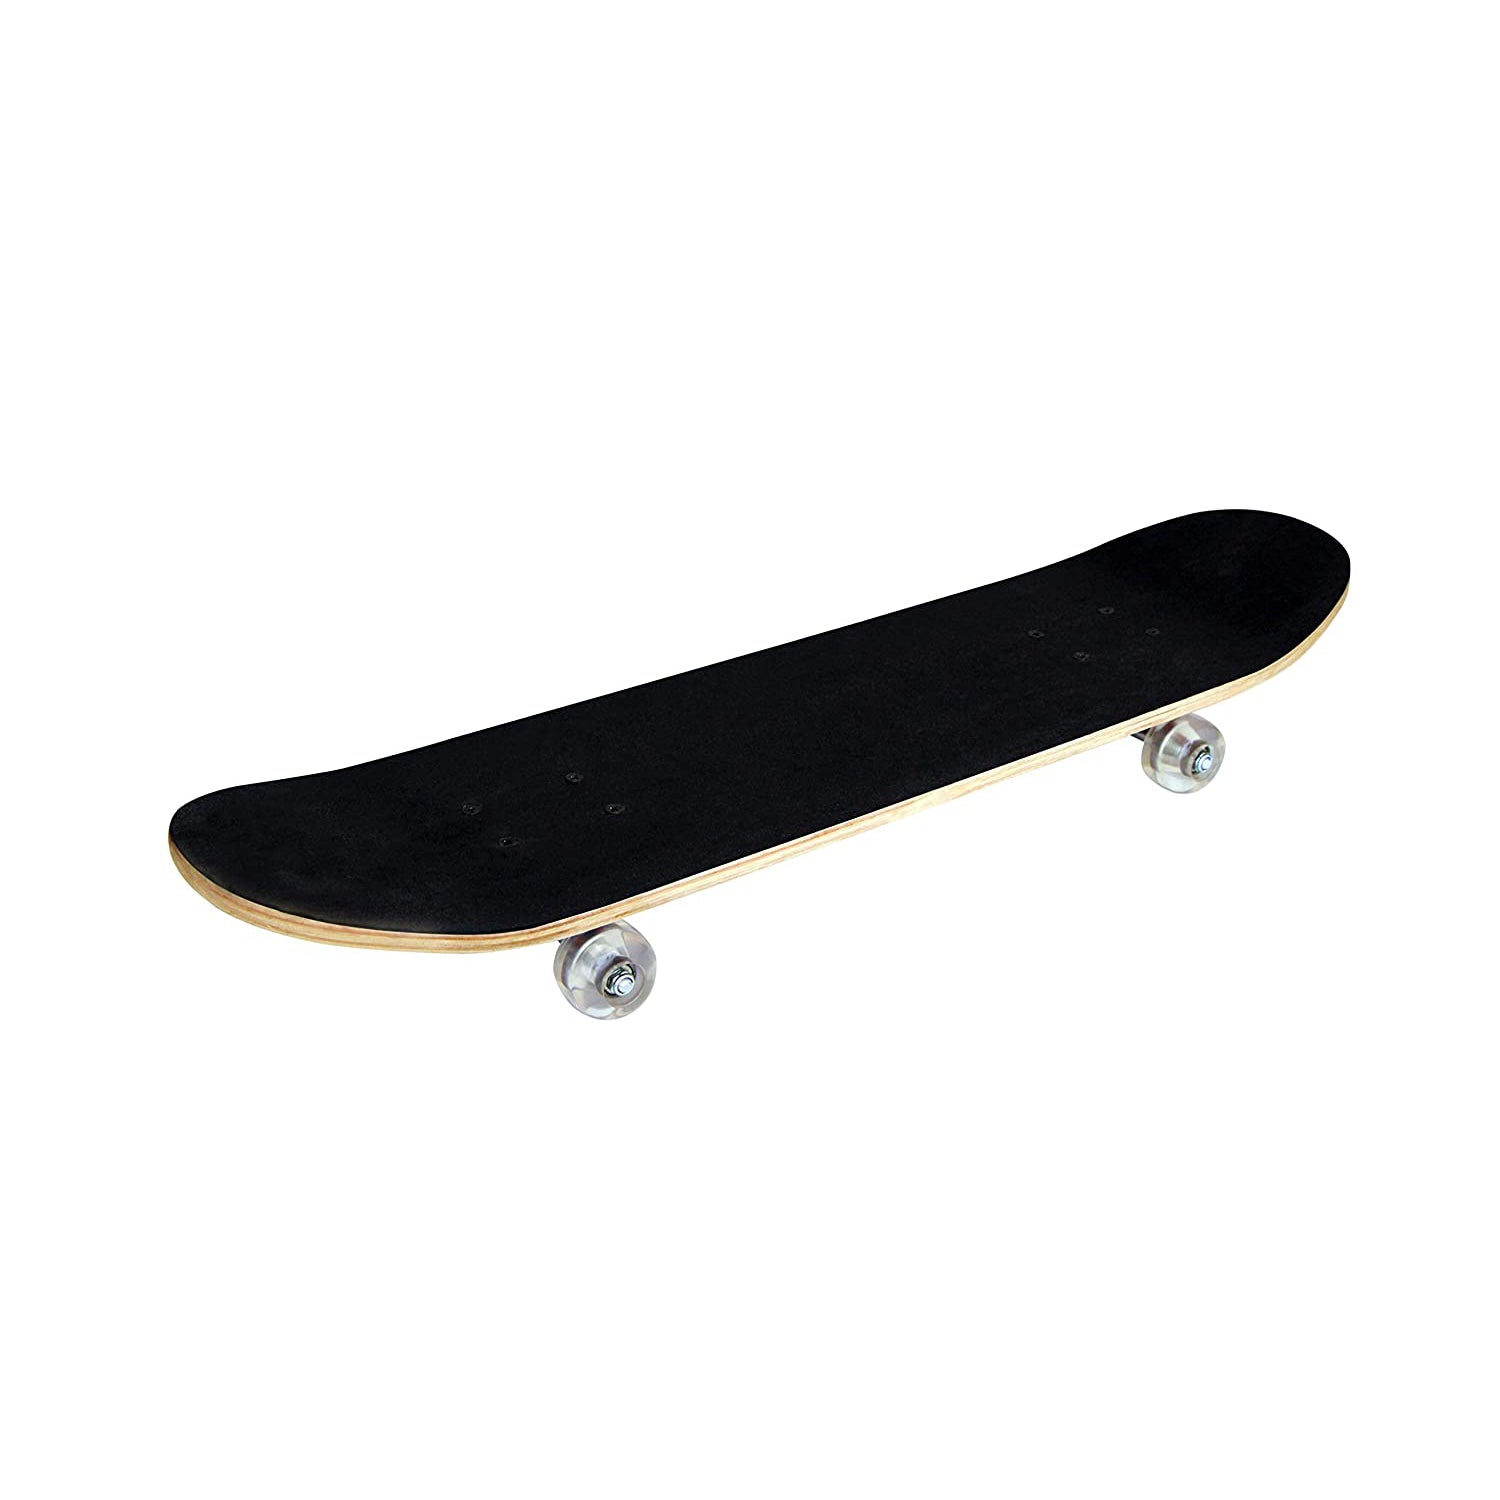 Nivia 801 Skateboard - Available for Seniors & Junior - Best Price online Prokicksports.com